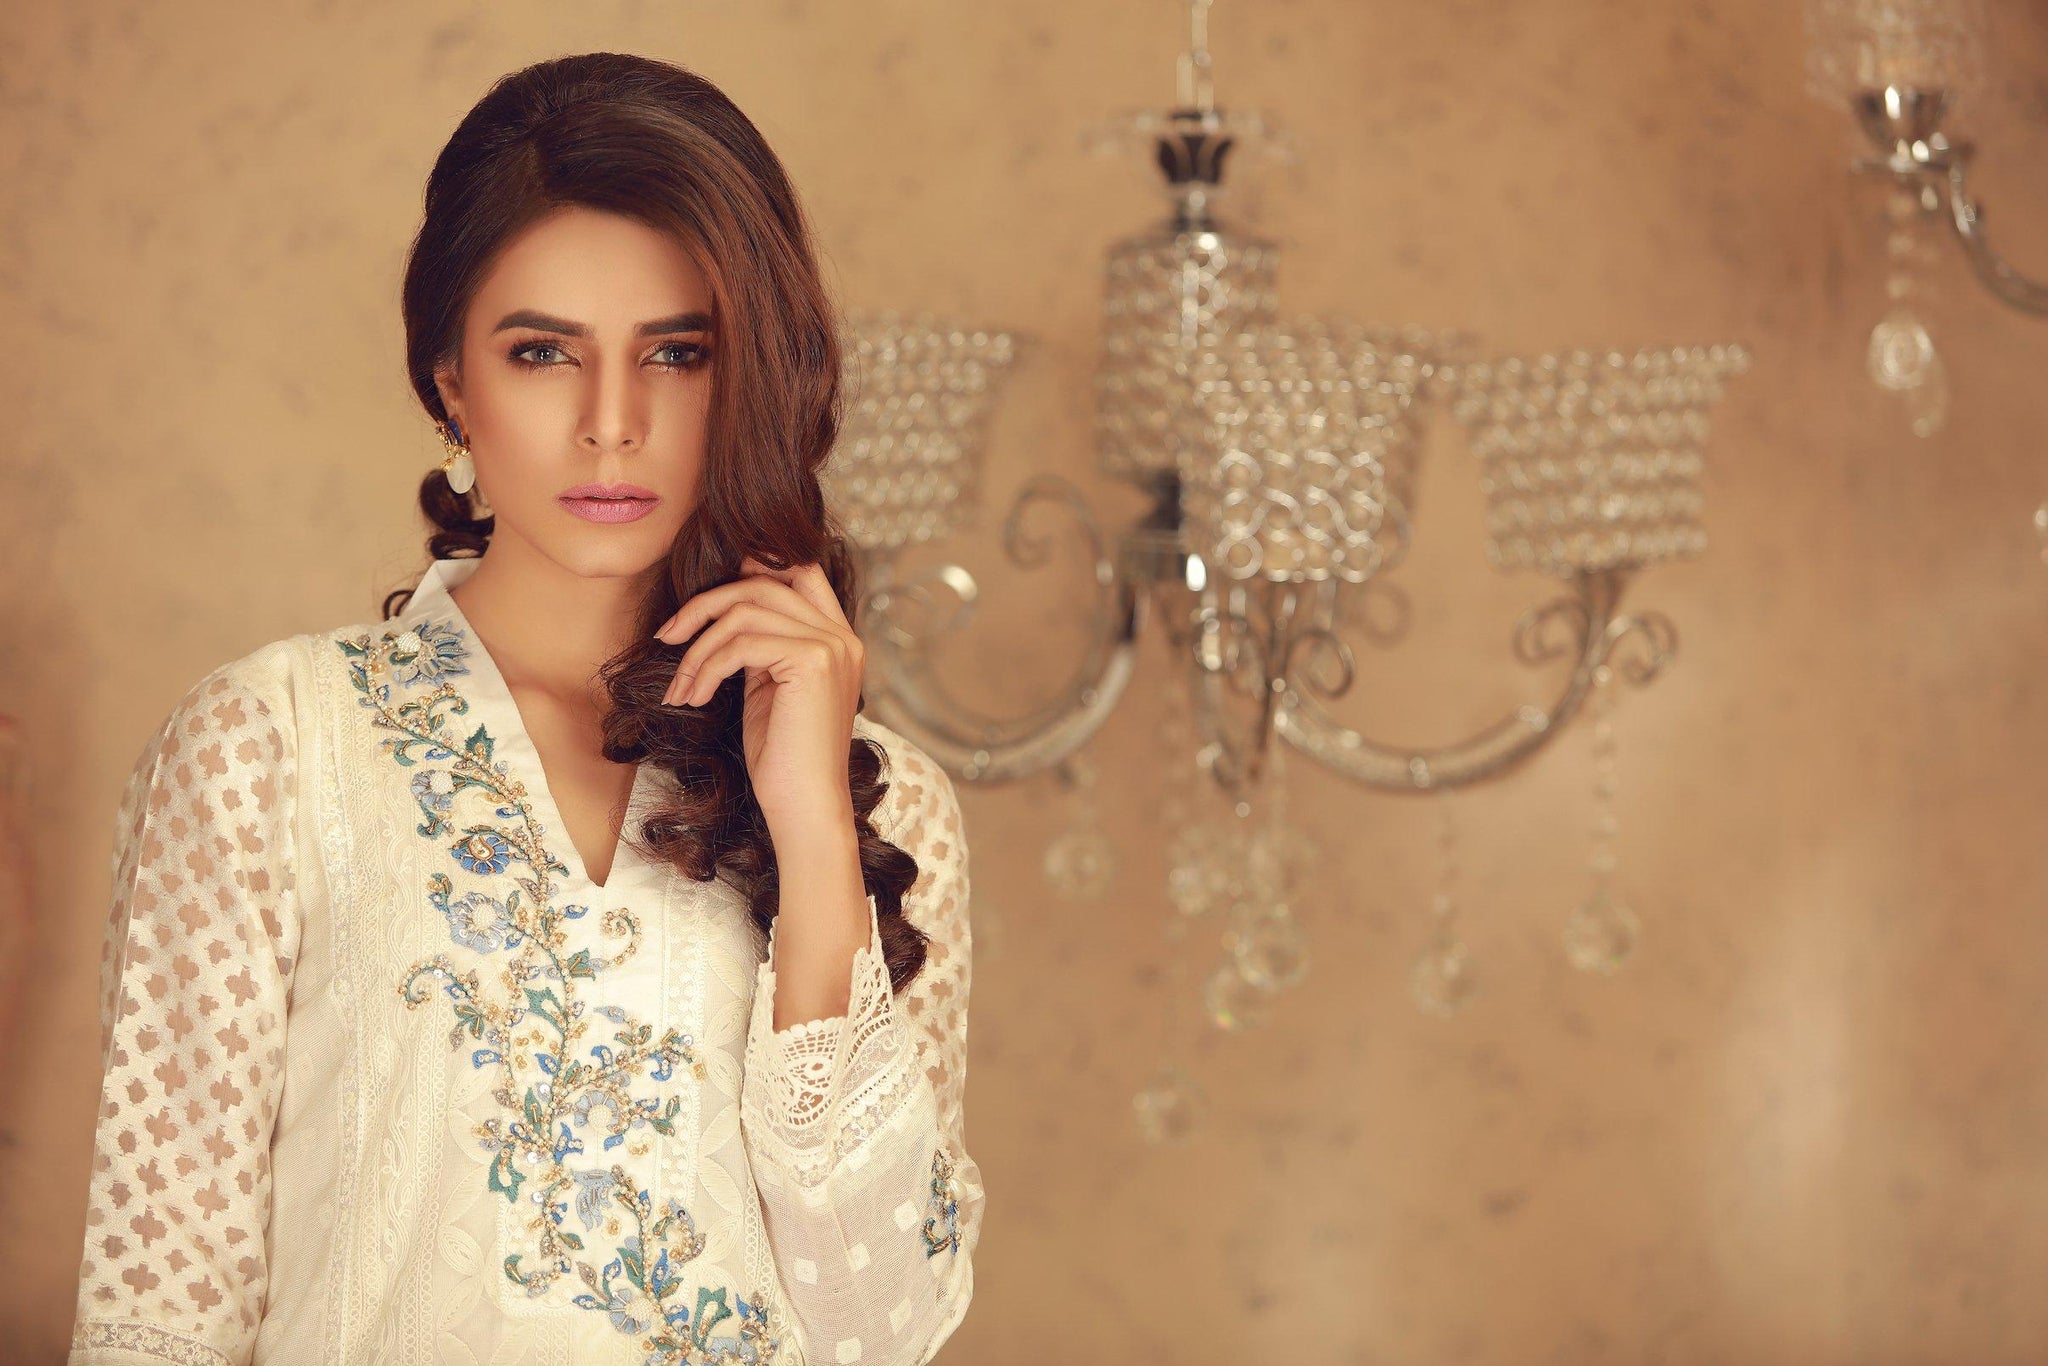 White Swan | Pakistani Designer Outfit | Sarosh Salman